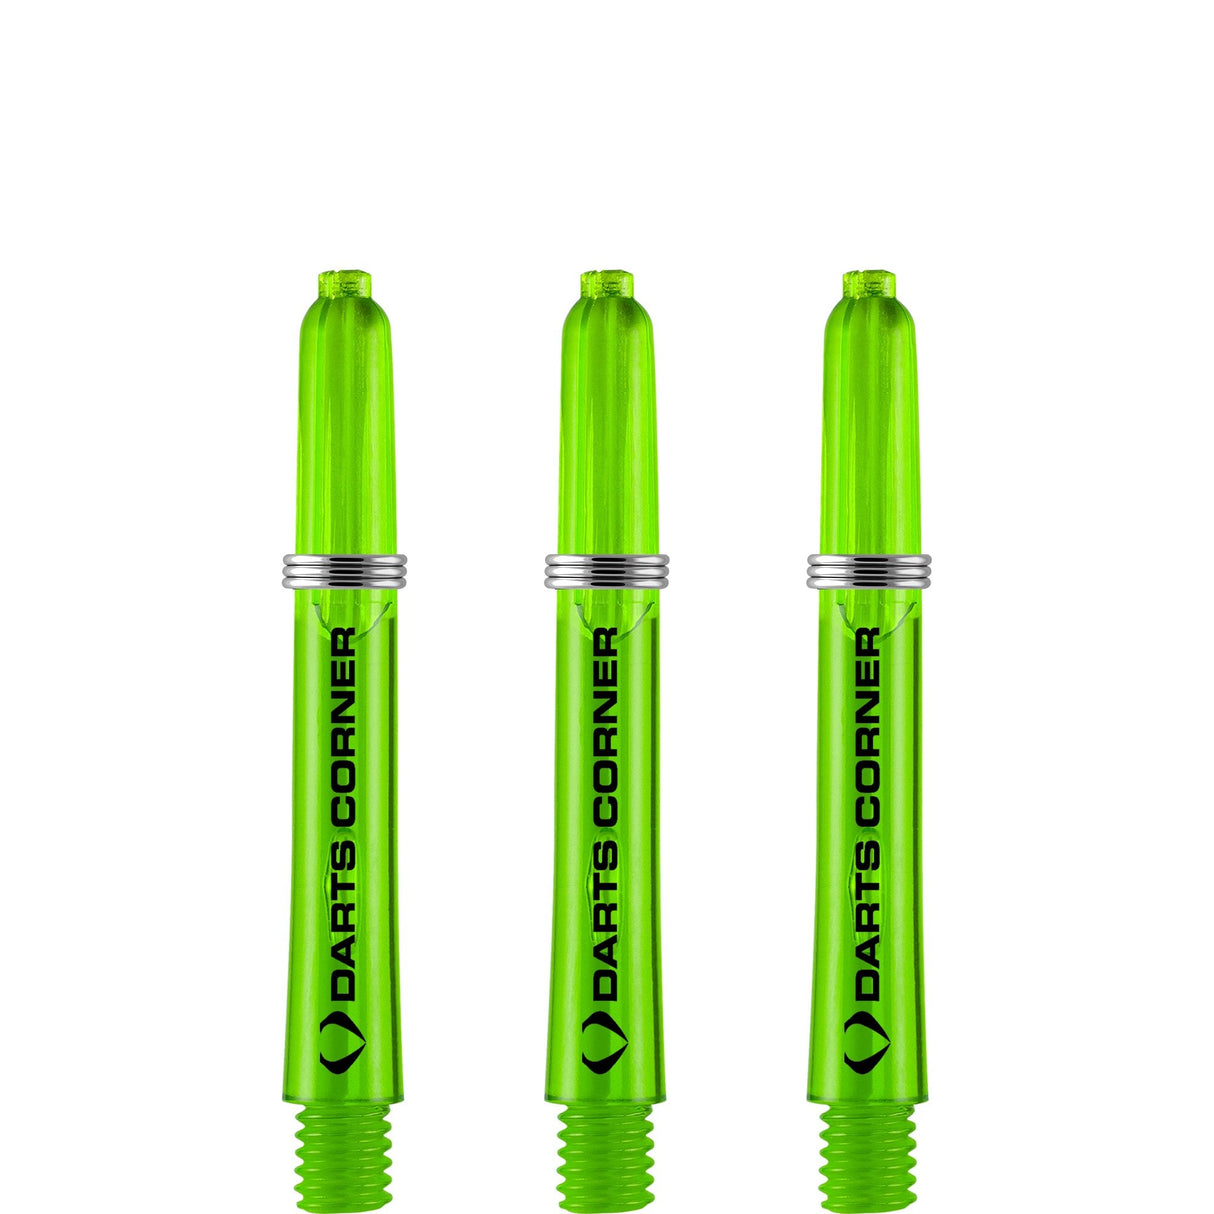 Darts Corner Polycarbonate Shafts - Dart Stems - Green Short